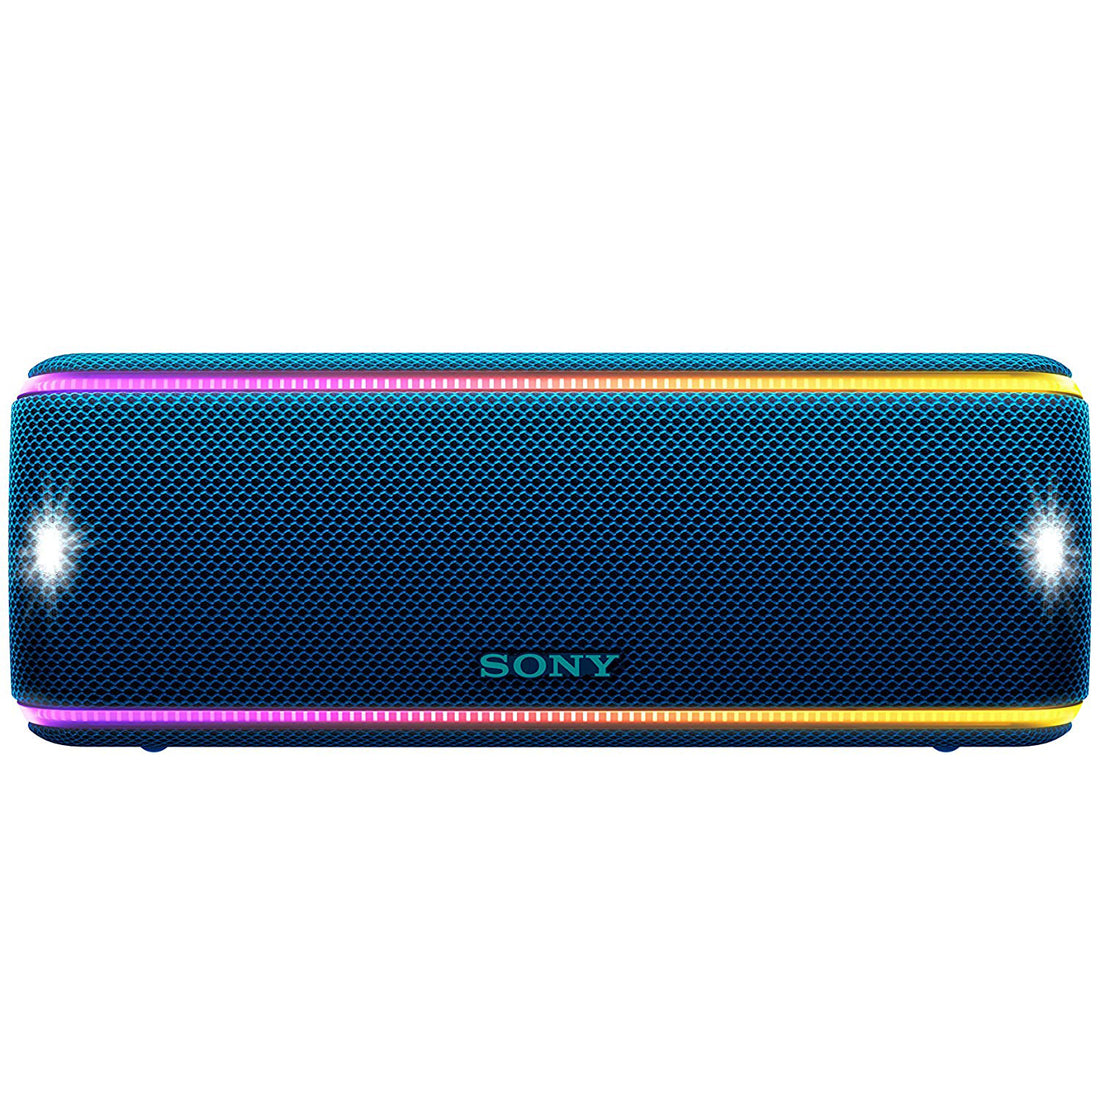 Sony - SRS-XB31 Portable Wireless Bluetooth Speaker - Blue (Certified Refurbished)